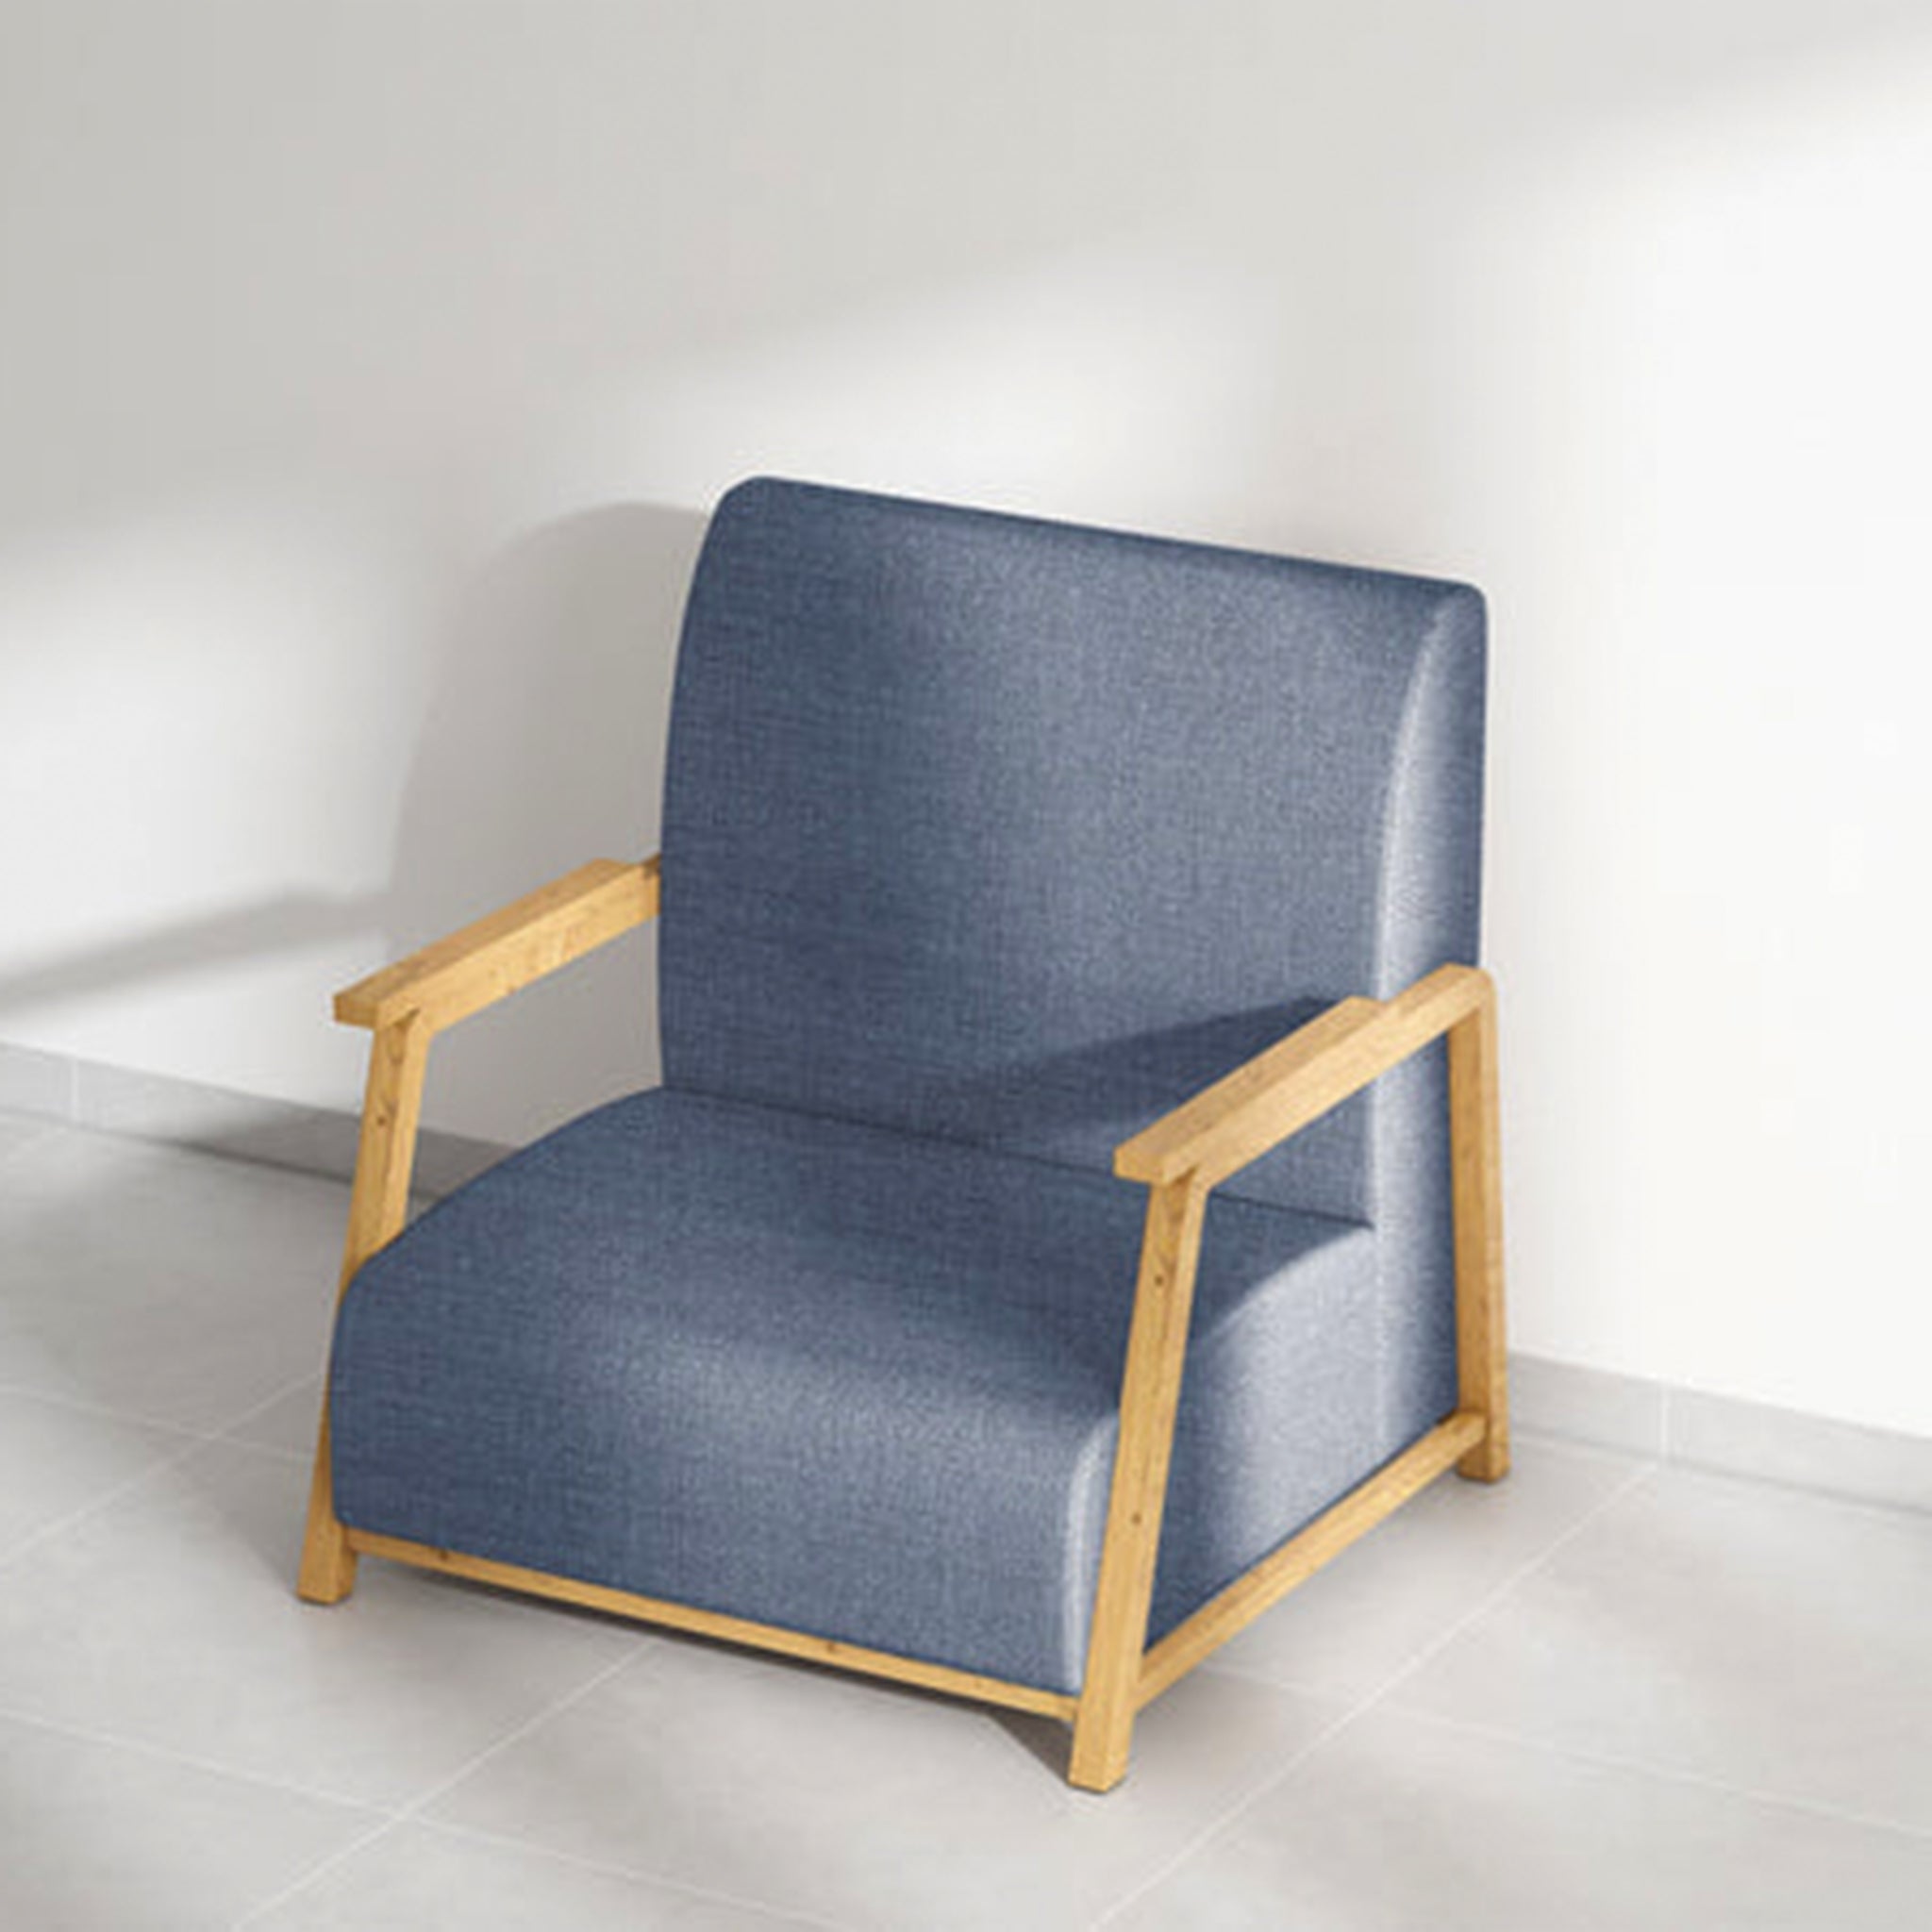 The Dixon Arm Accent Chair showcasing modern, simple design.